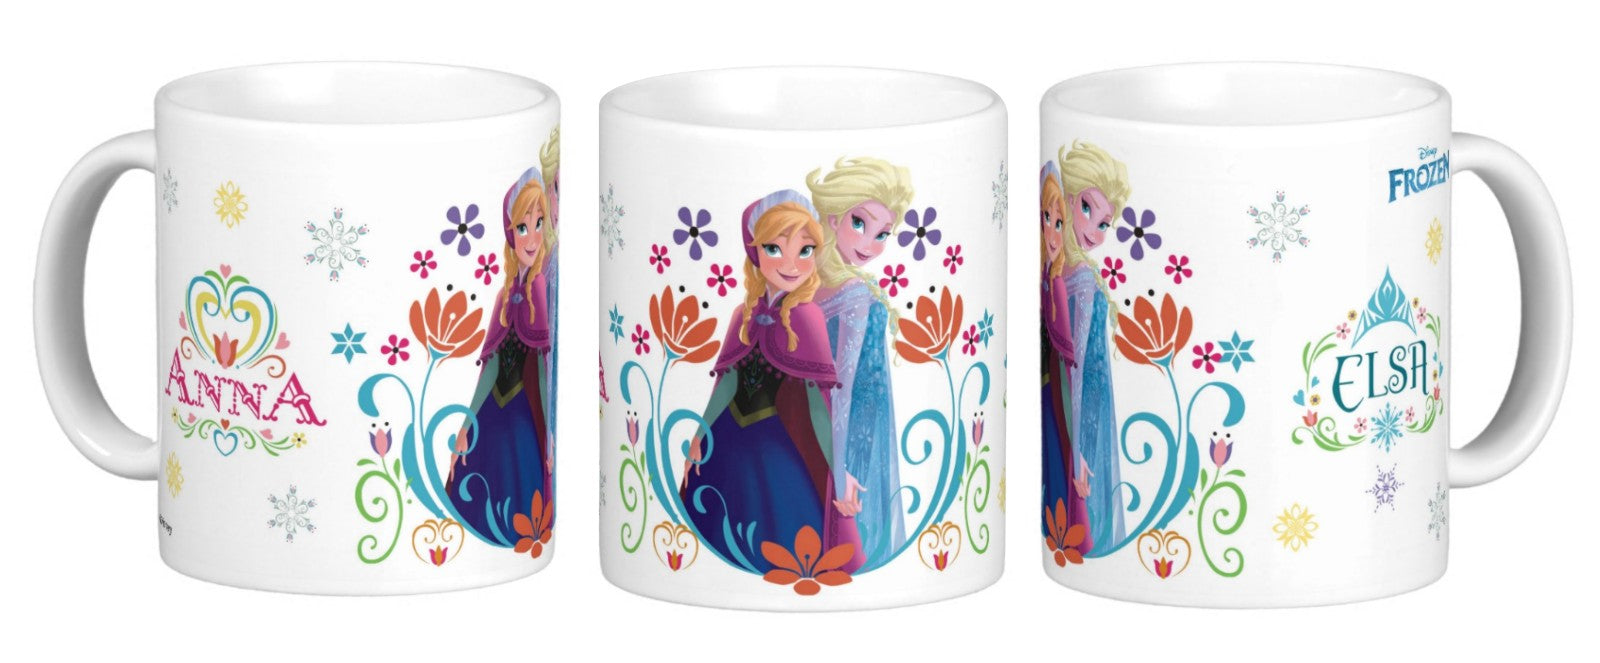 Frozen 2 Party Bags. 6pk Girls, gifts, treats, Elsa/Anna/parties/Disney/loot  | eBay